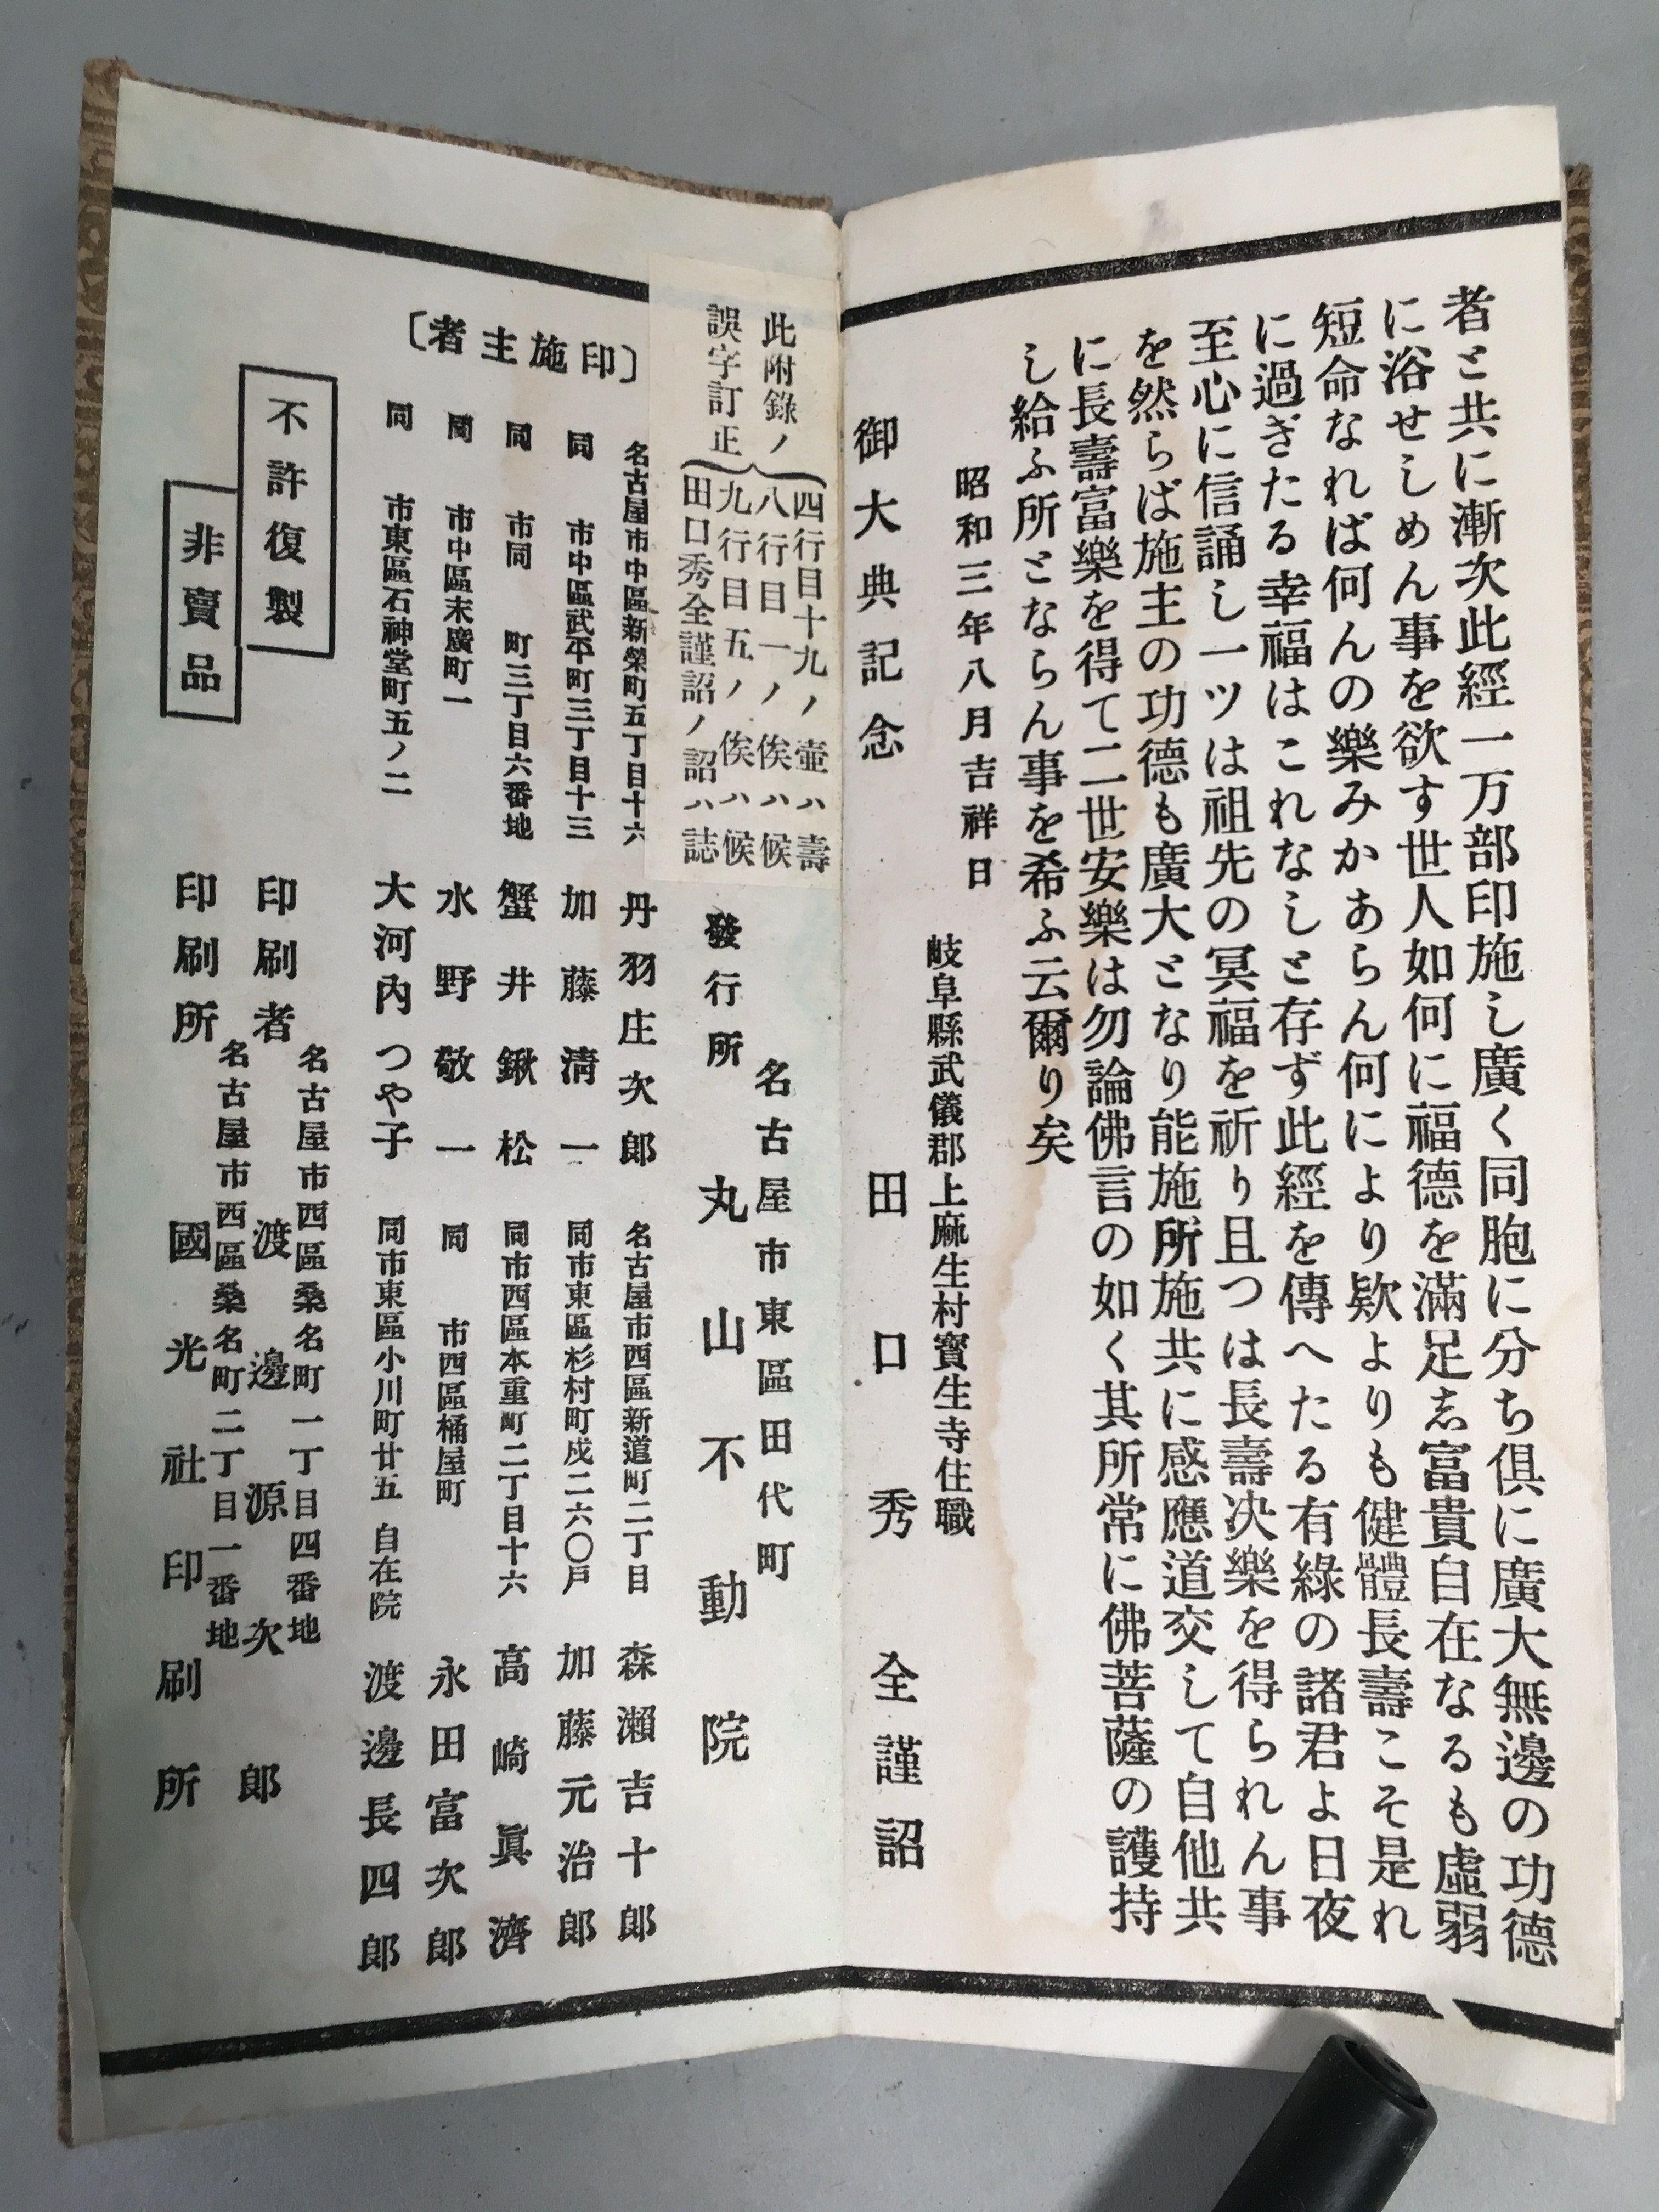 Japanese Buddhist Sutra Book Vtg Fabric Cover Folding Paper 1928 BU293